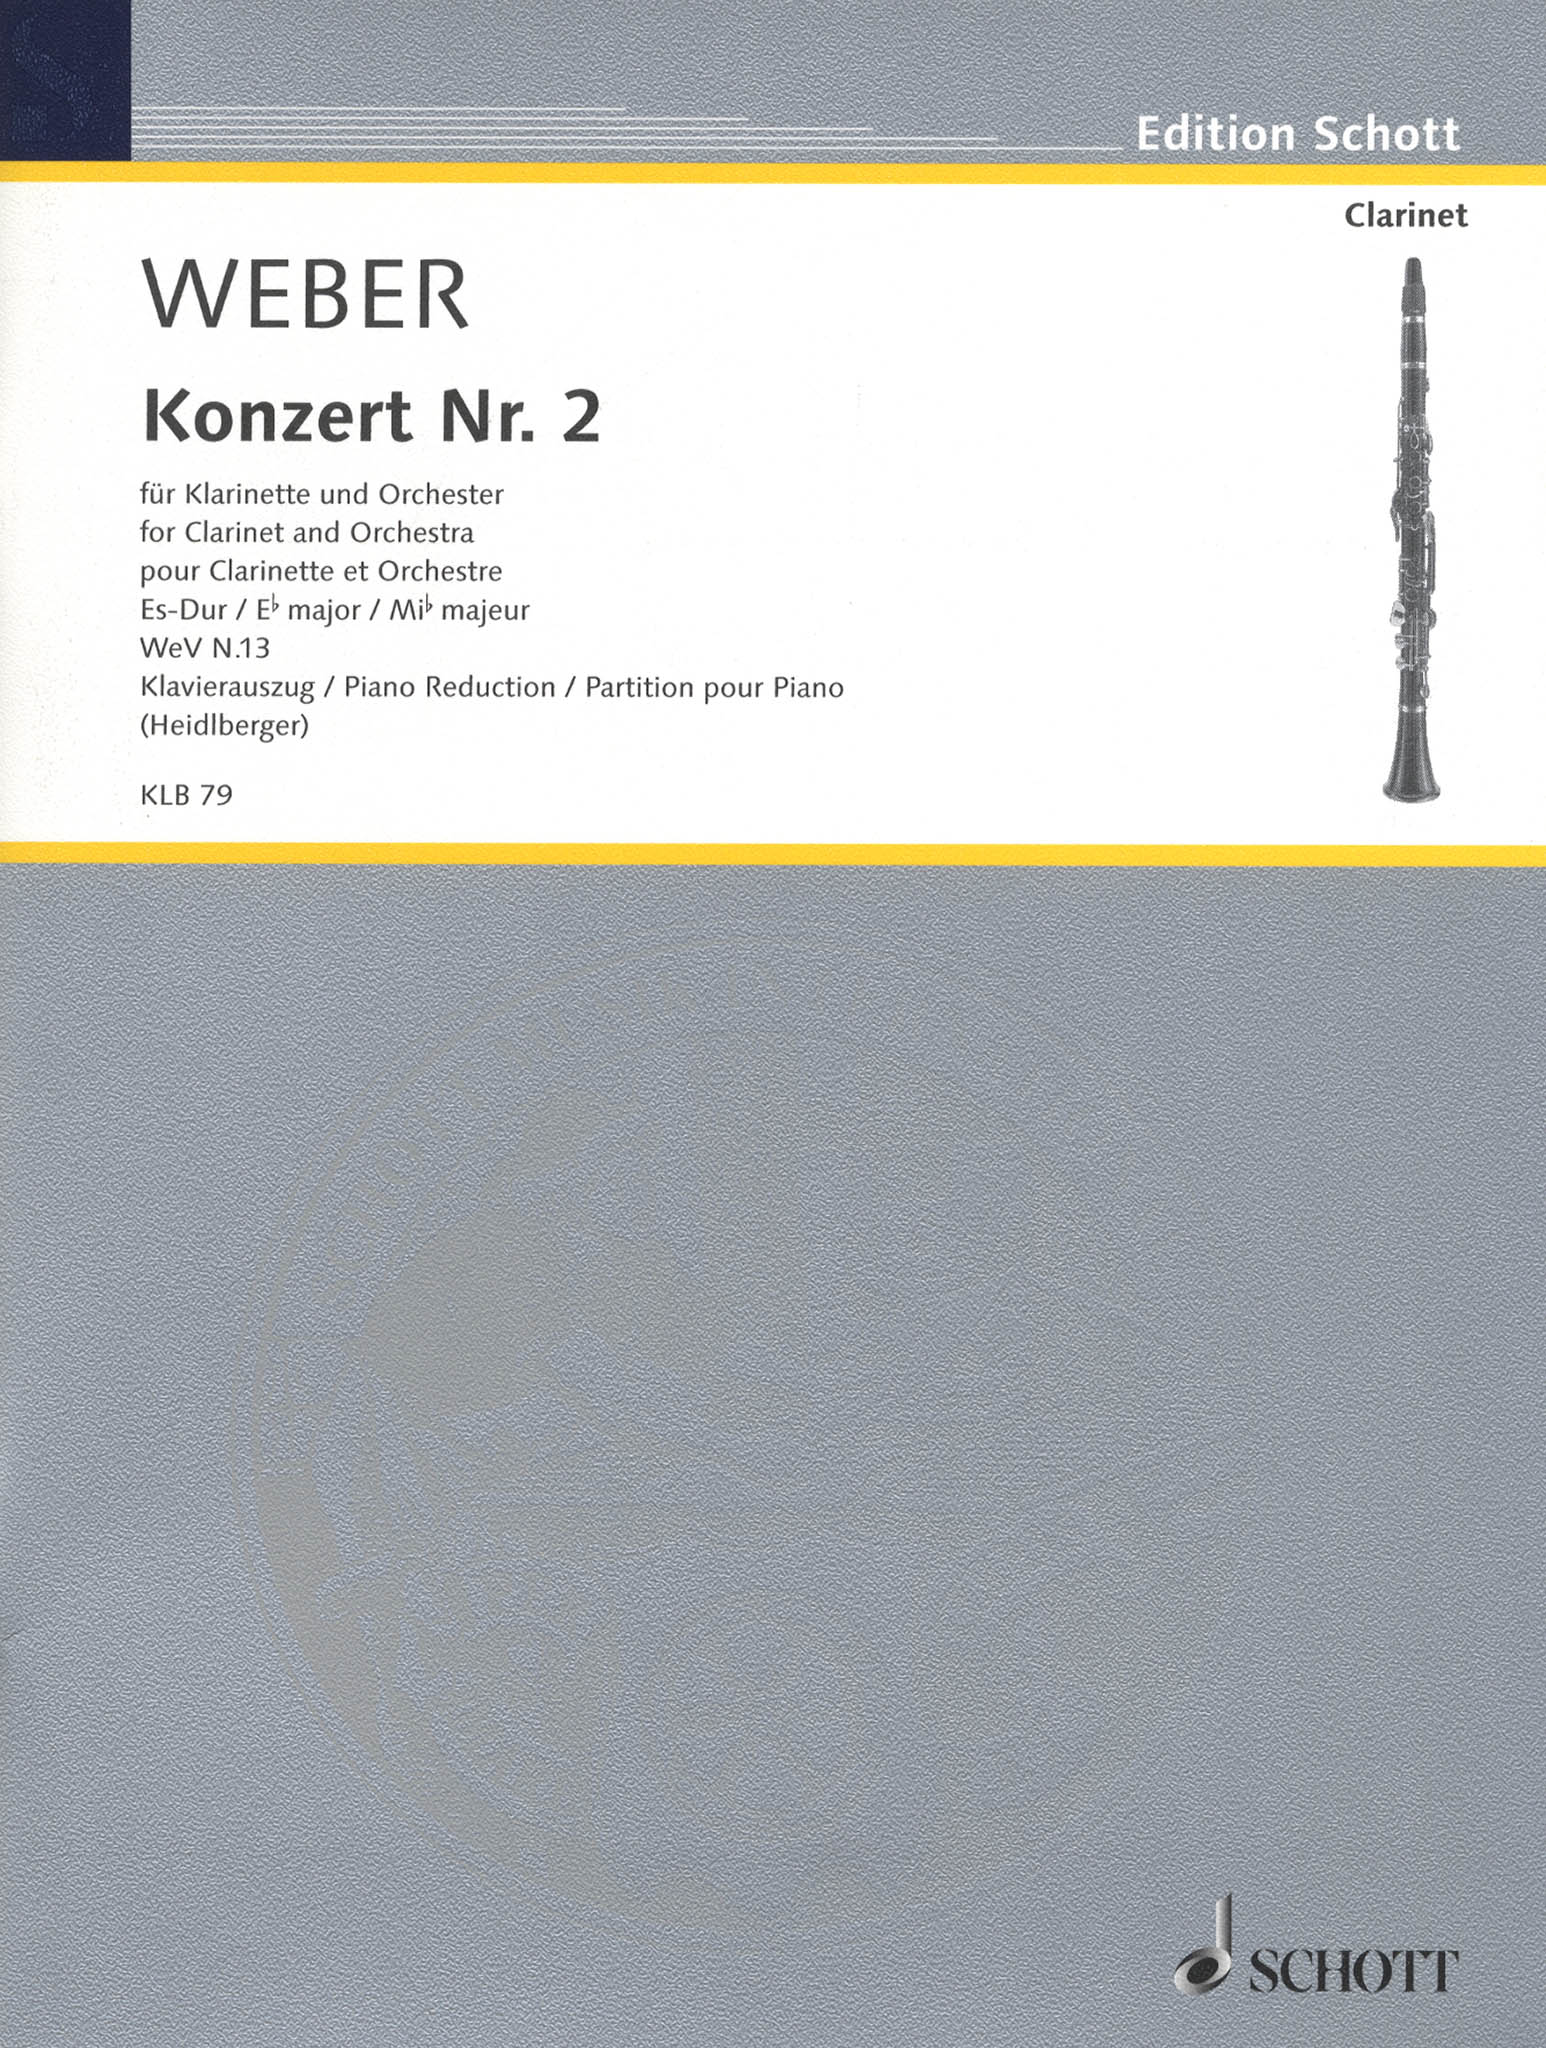 Clarinet Concerto No. 2 in E-flat Major, Op. 74 Cover